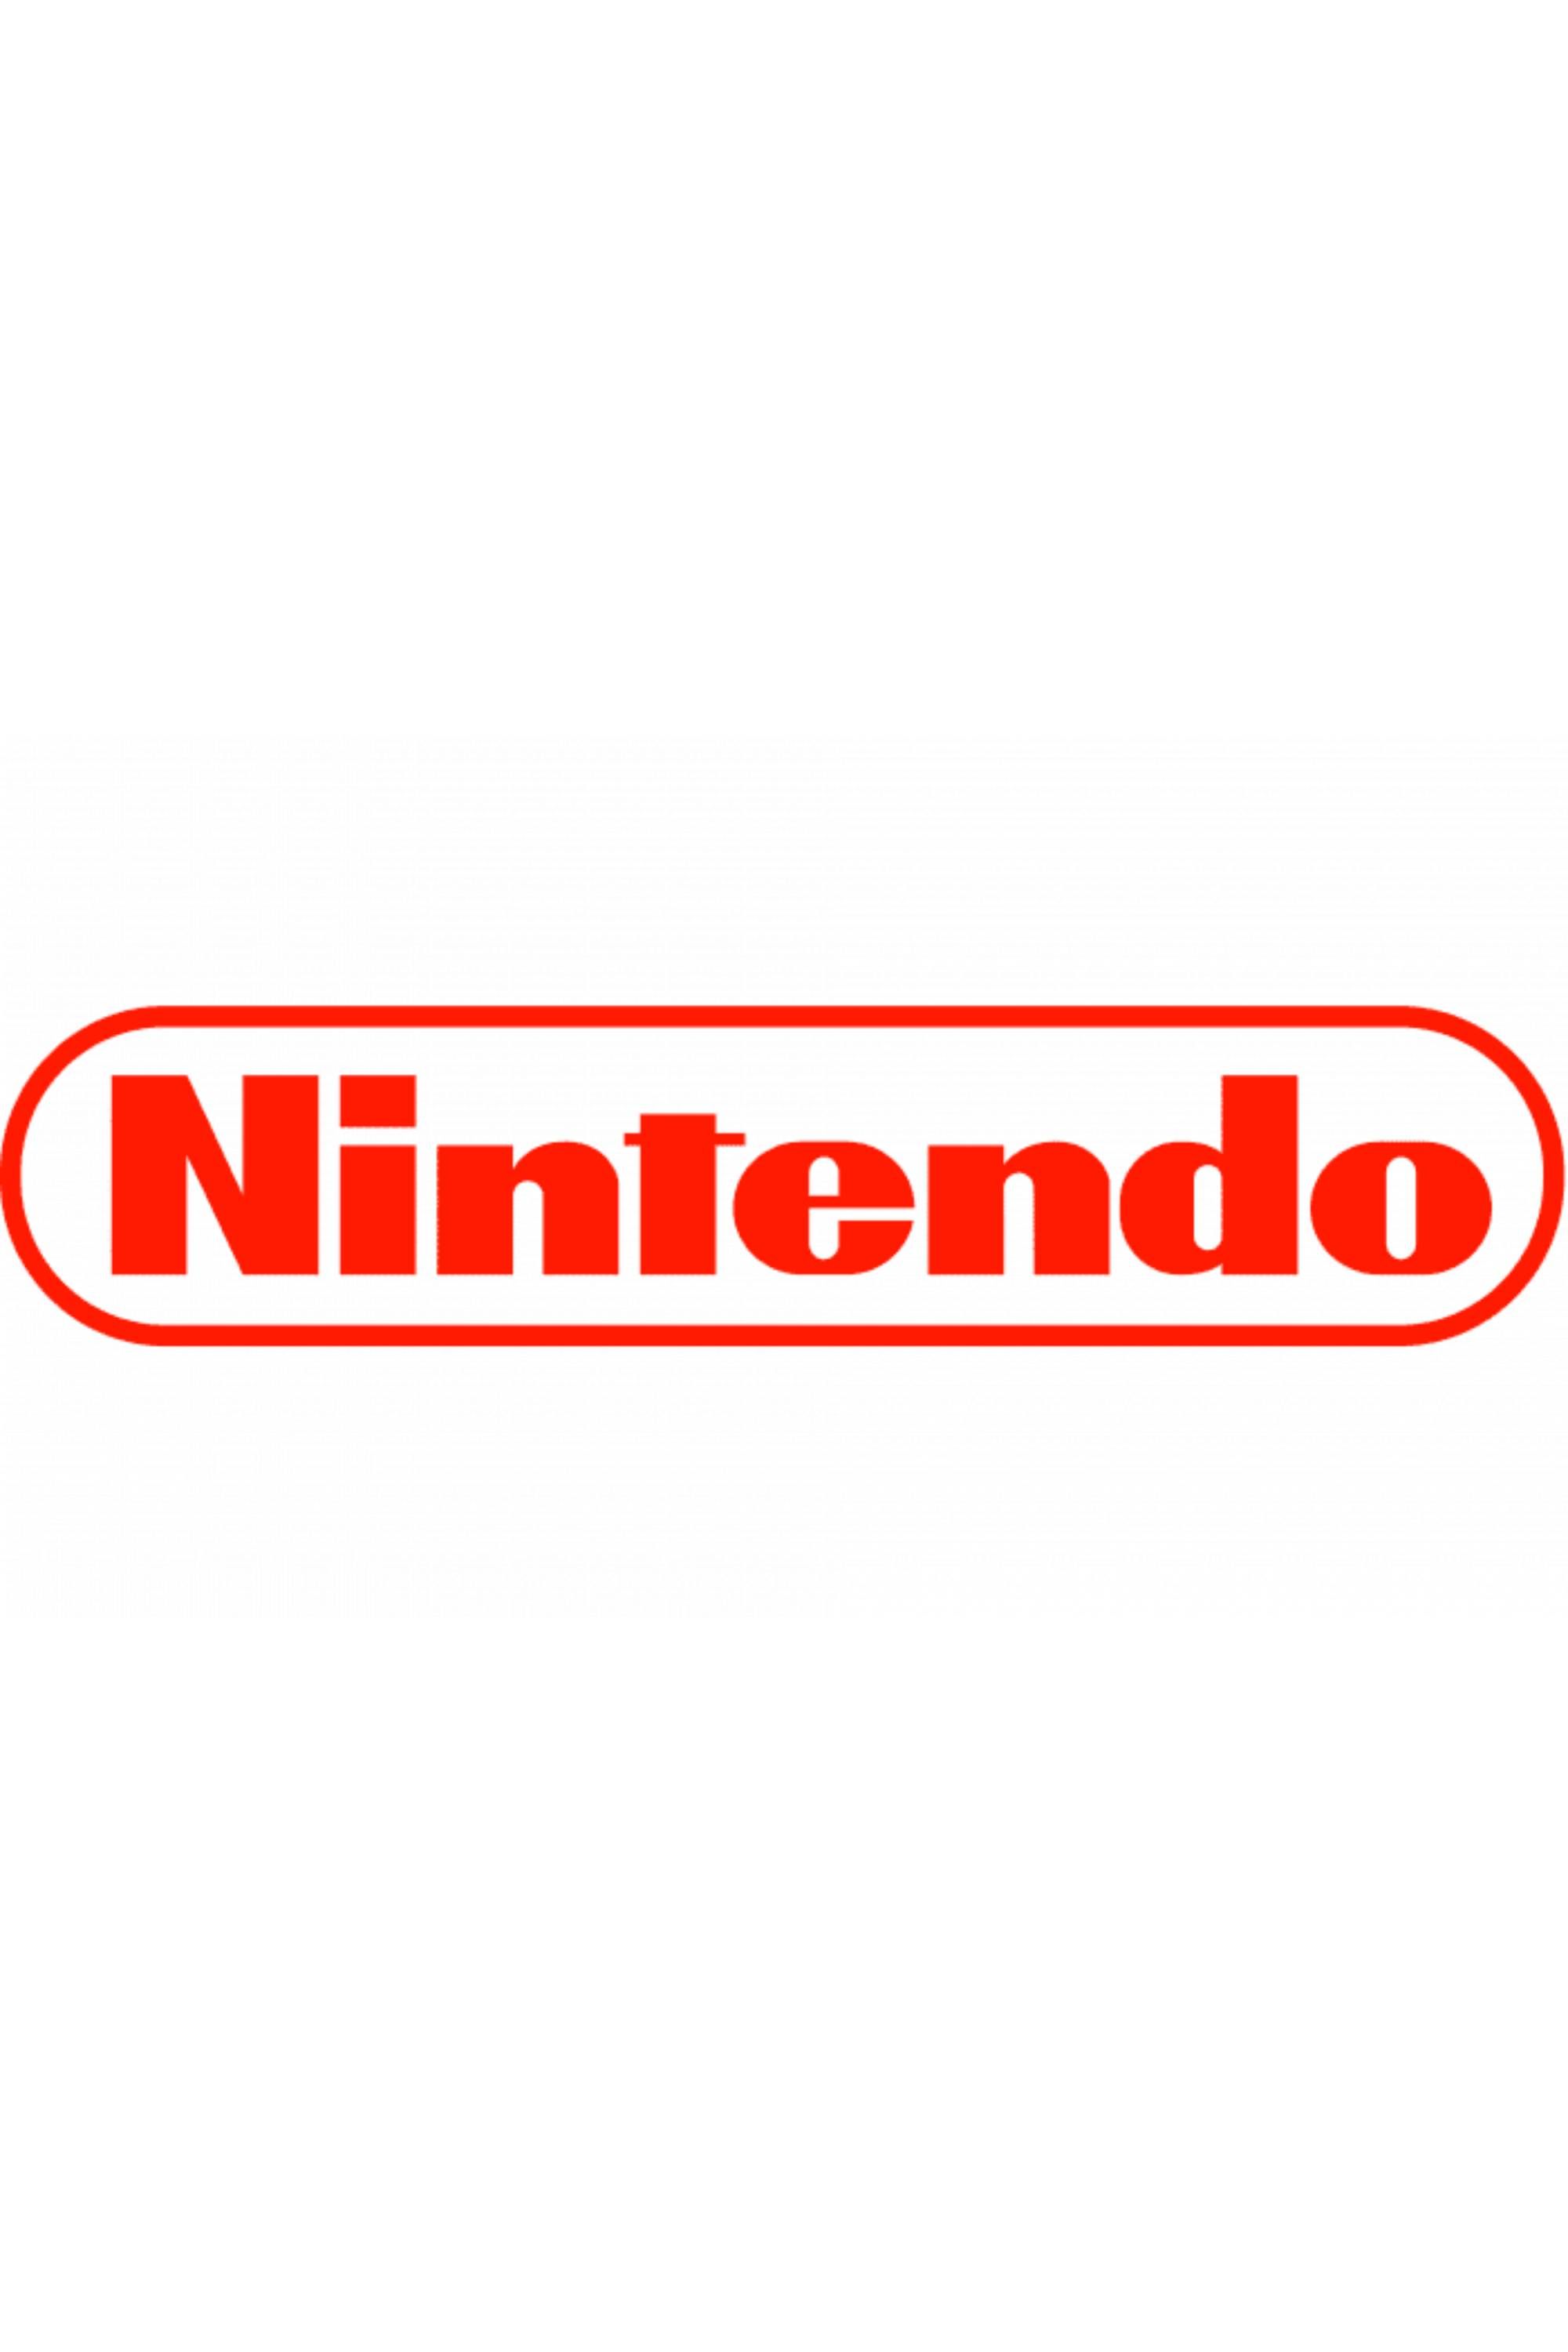 __Nintendo_